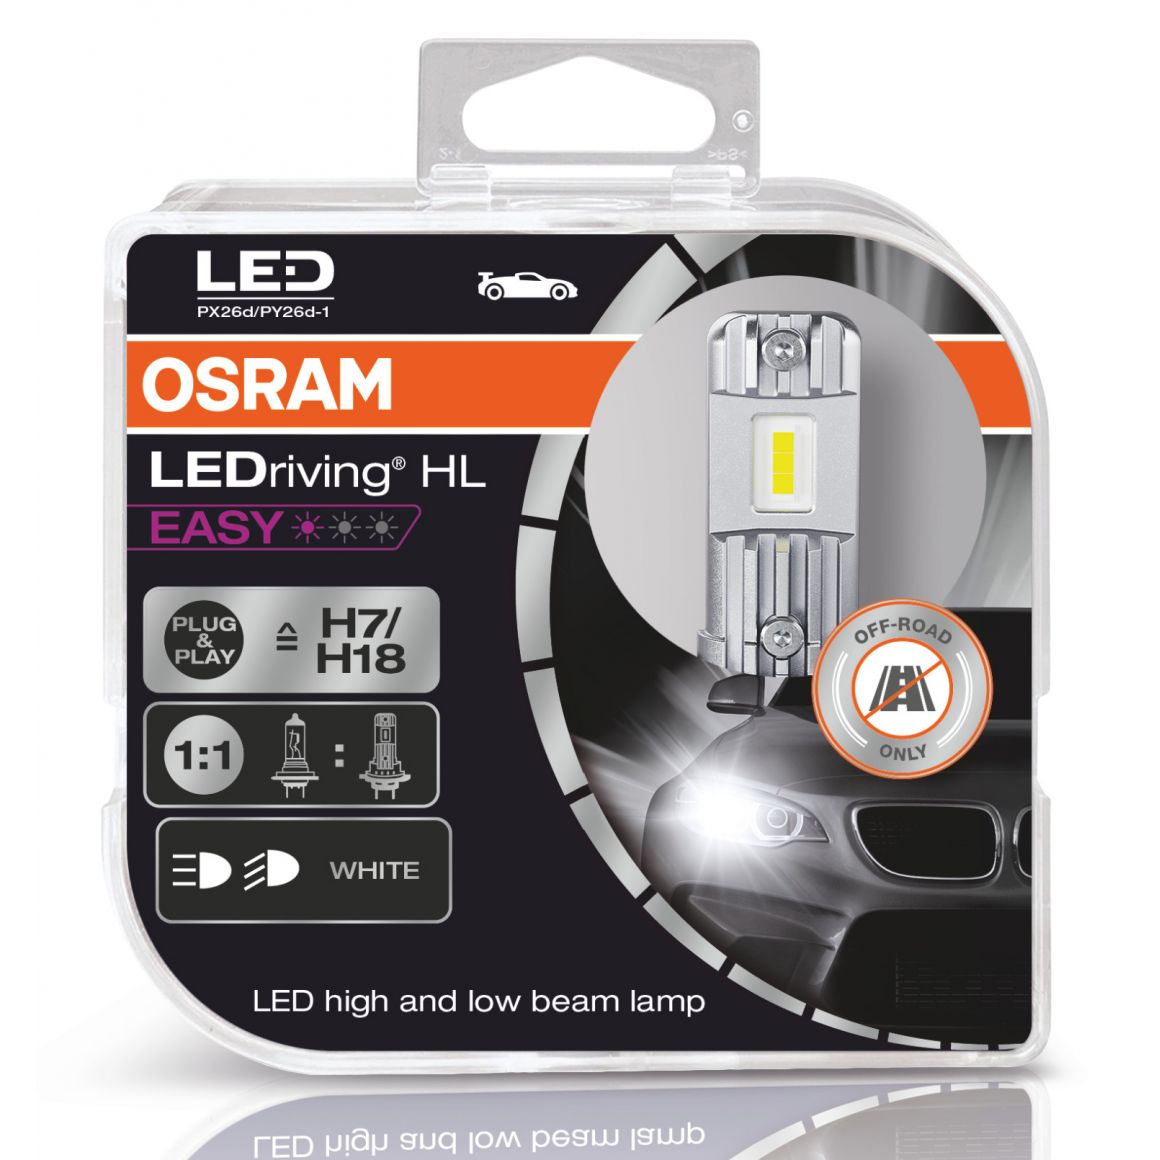 2 bombillas LED H7 y H18 OSRAM LEDriving EASY - 12V 16W - PX26d PY26d-1 - France-Xenon